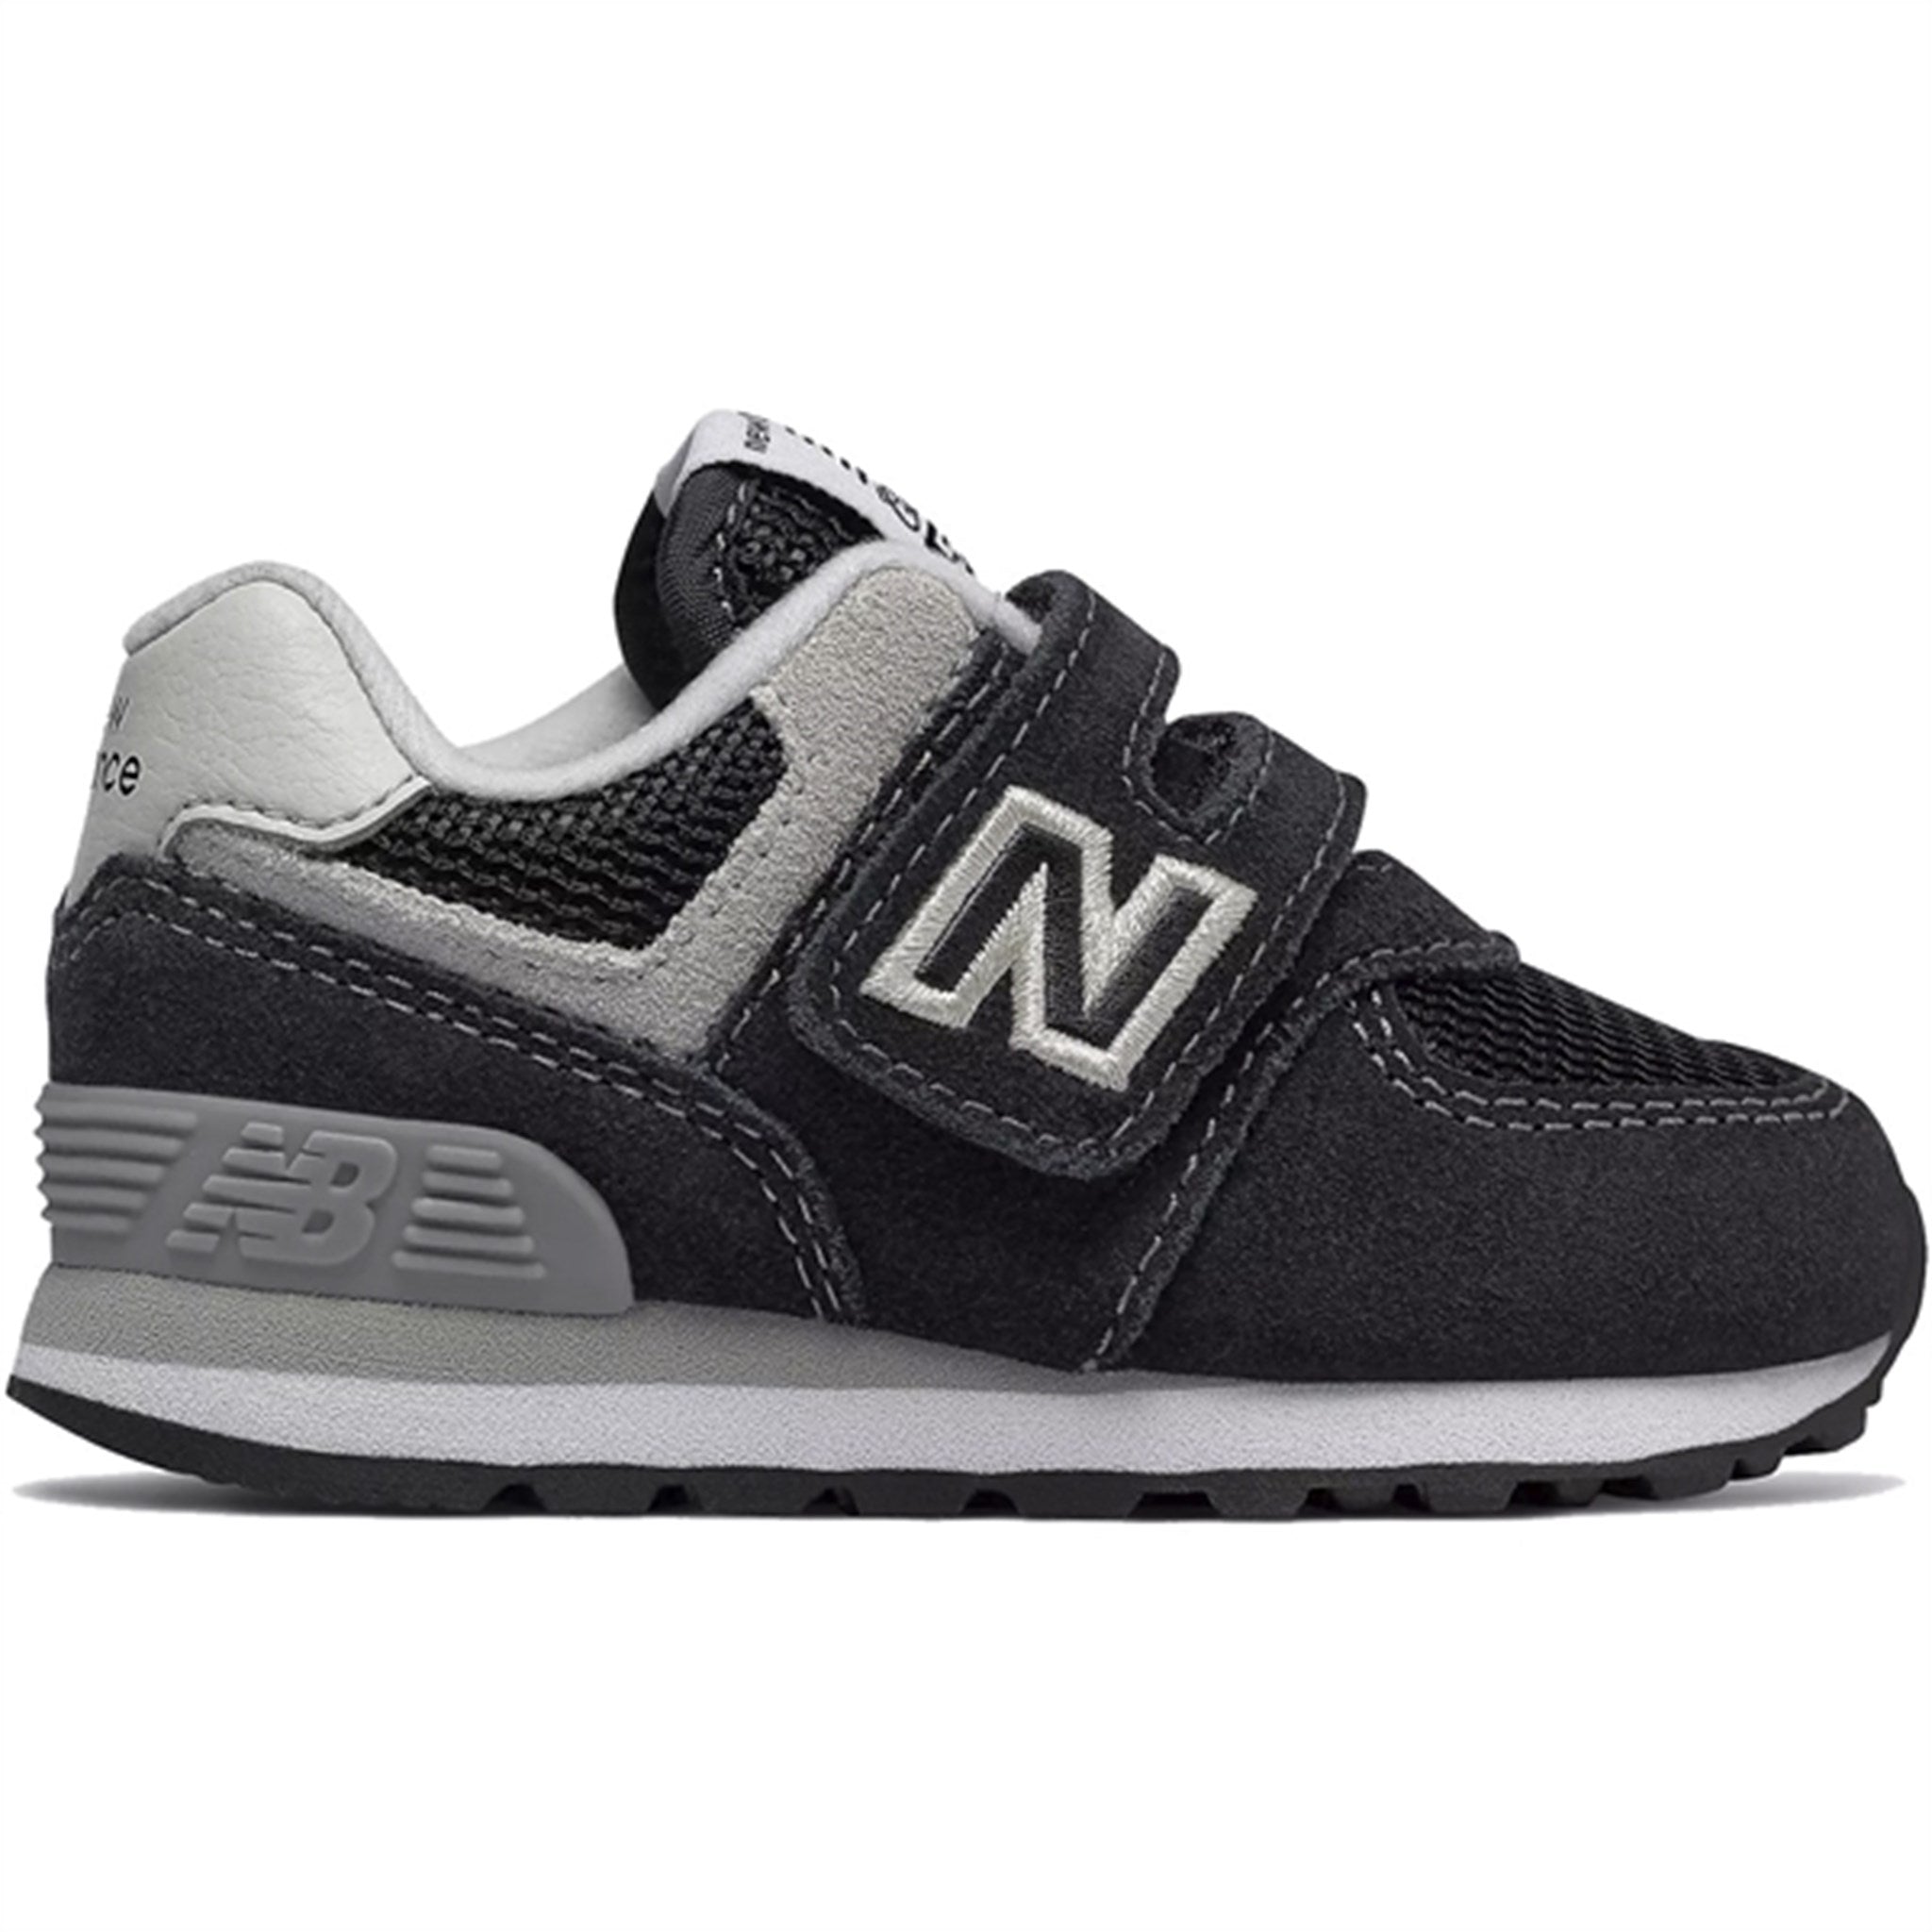 New Balance 574 Black Sneakers